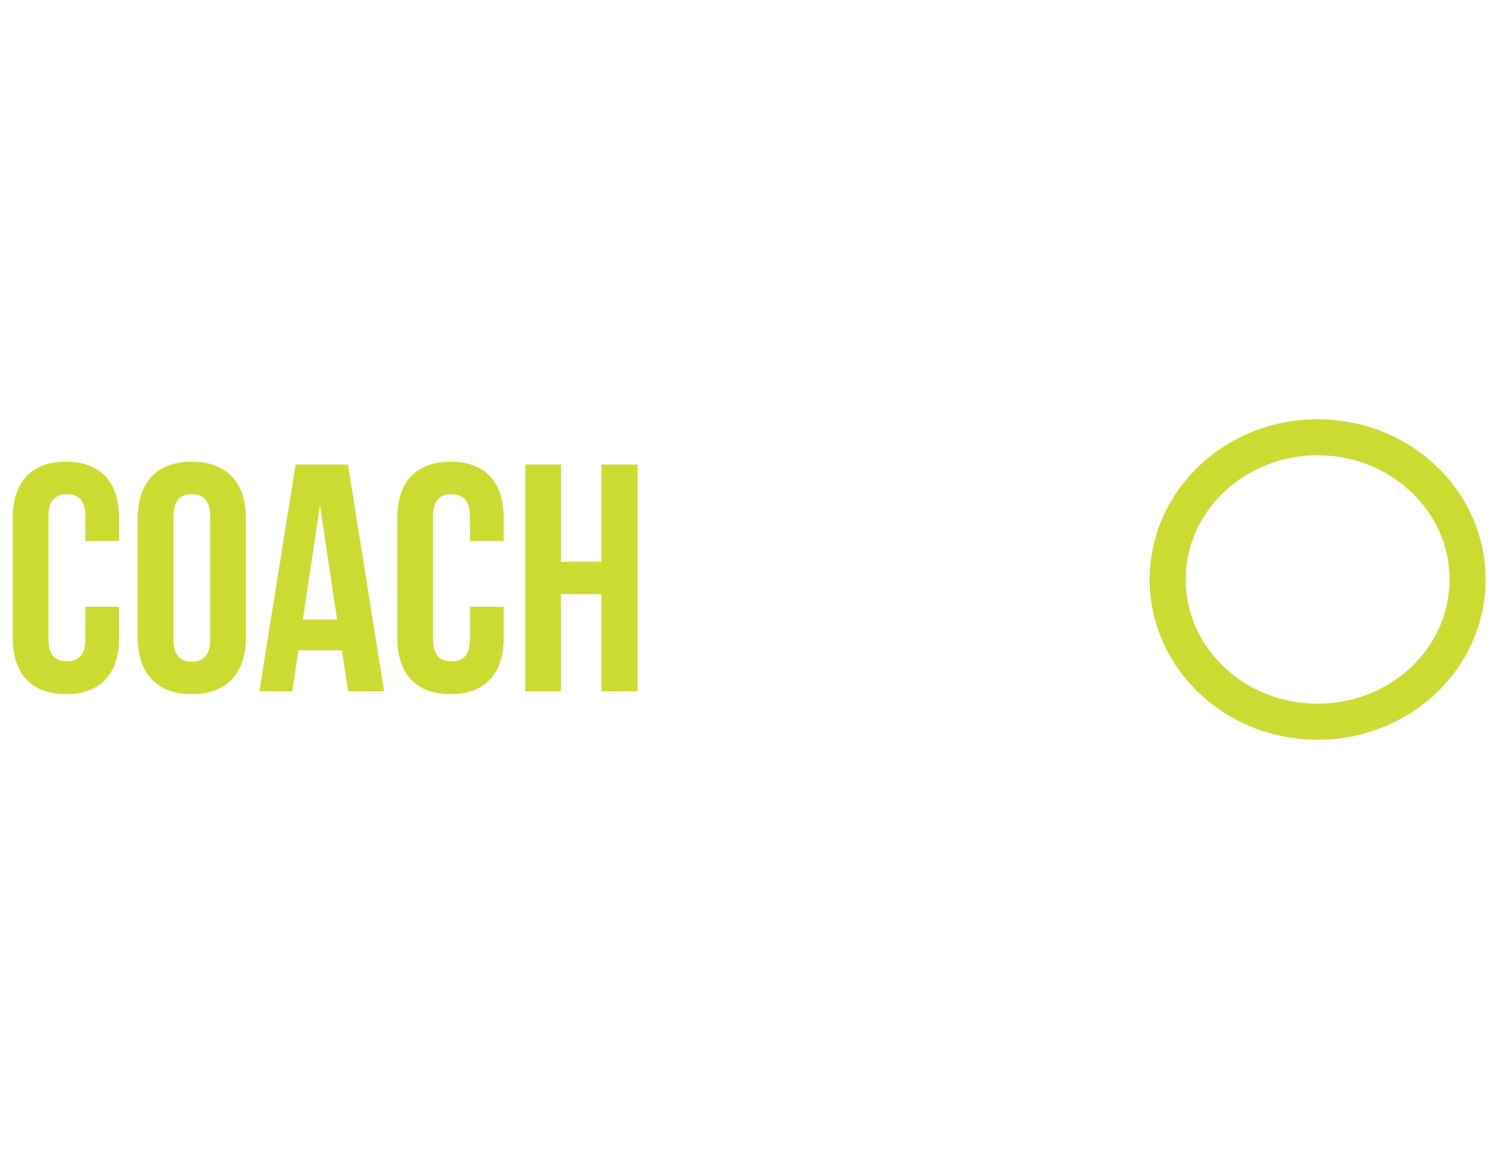 Coach Tech 9